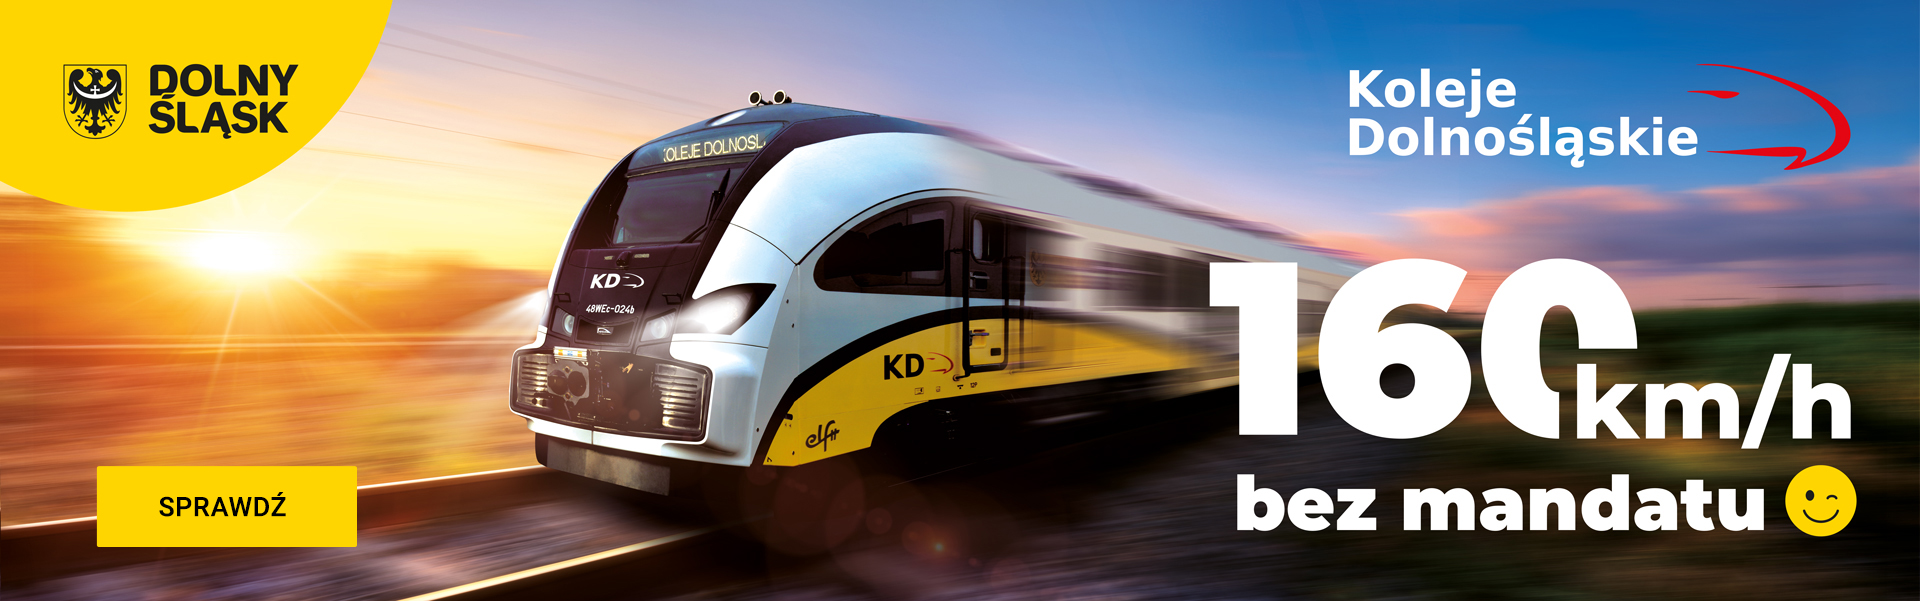 KD Sprinter - banner kampanii 160 km/h bez mandatu